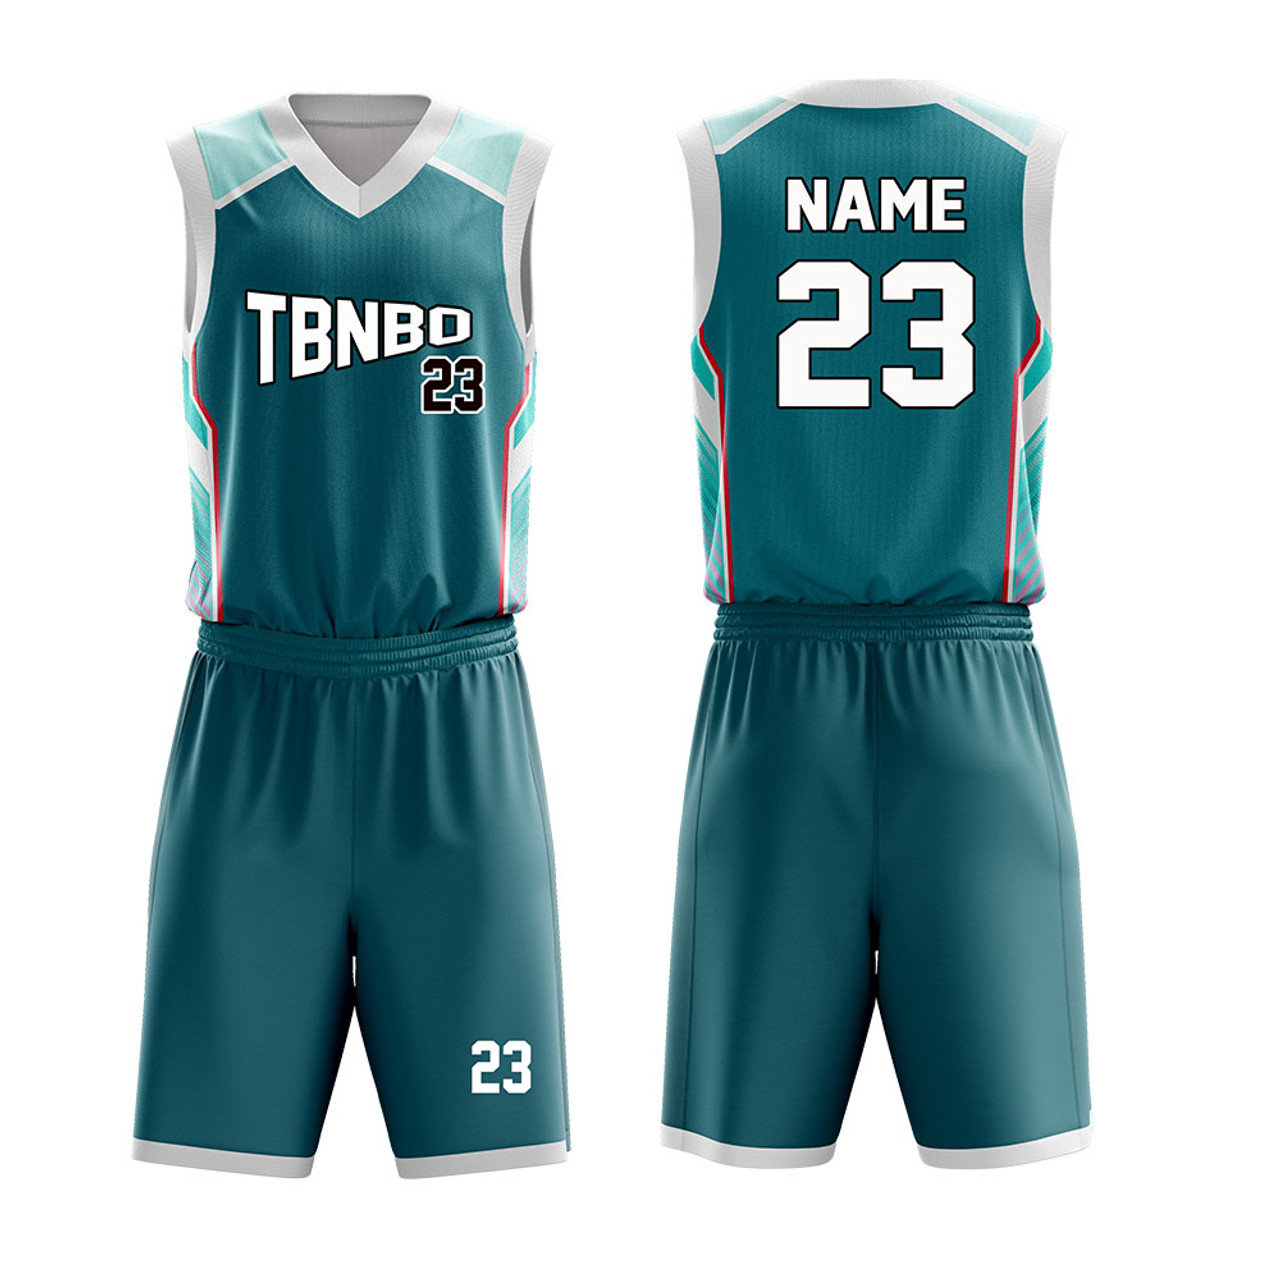 Custom Your Own Design Best Quality Men's Dry Fit Basketball Wear Men's Basketball  Uniform Jersey